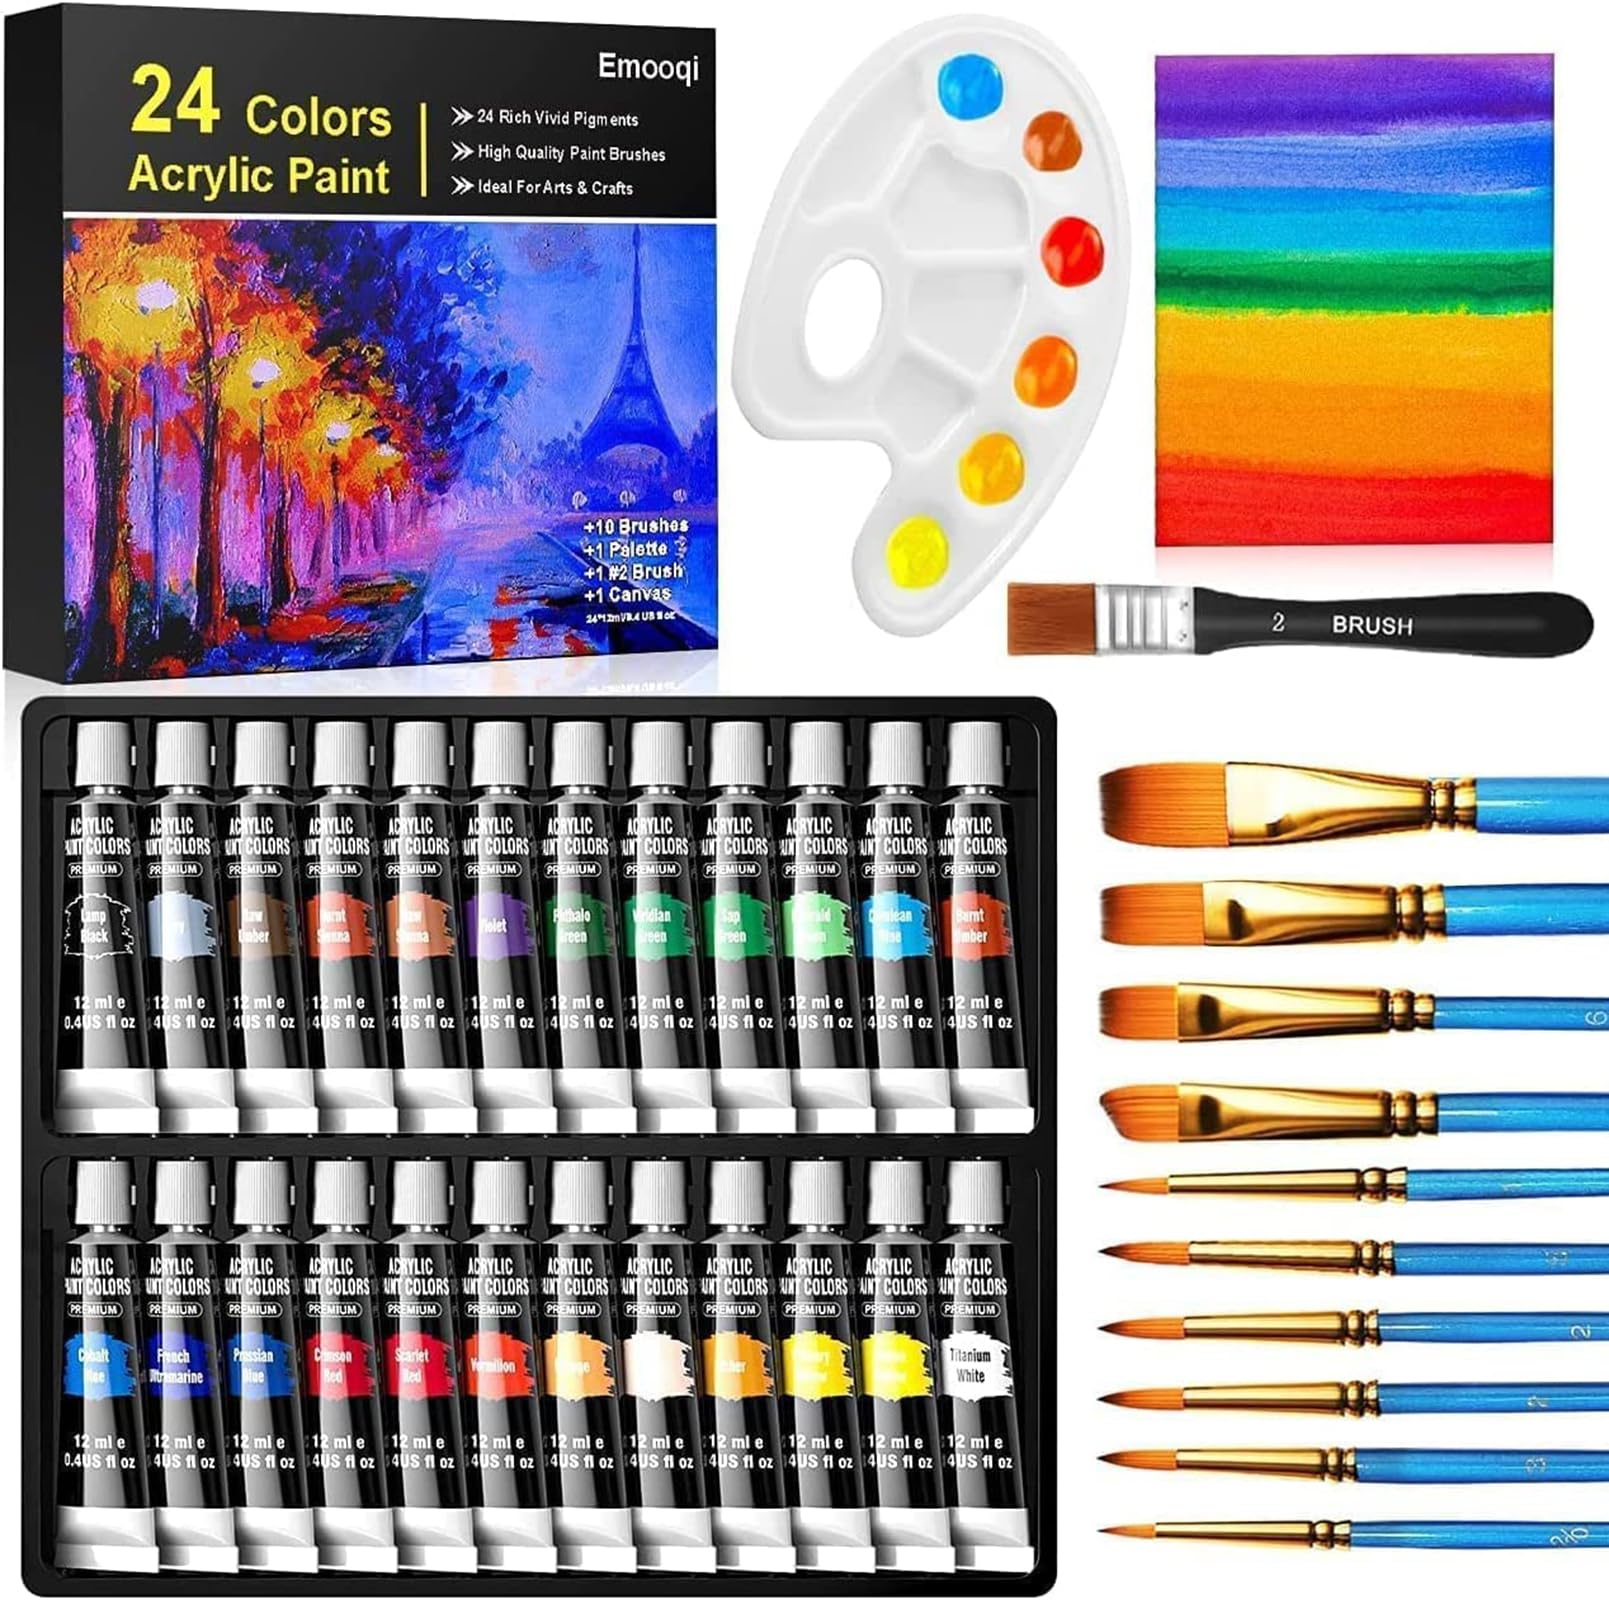 Emooqi Acrylic Paint Set 24 Rich Paint Colors with 11 Art Brushes